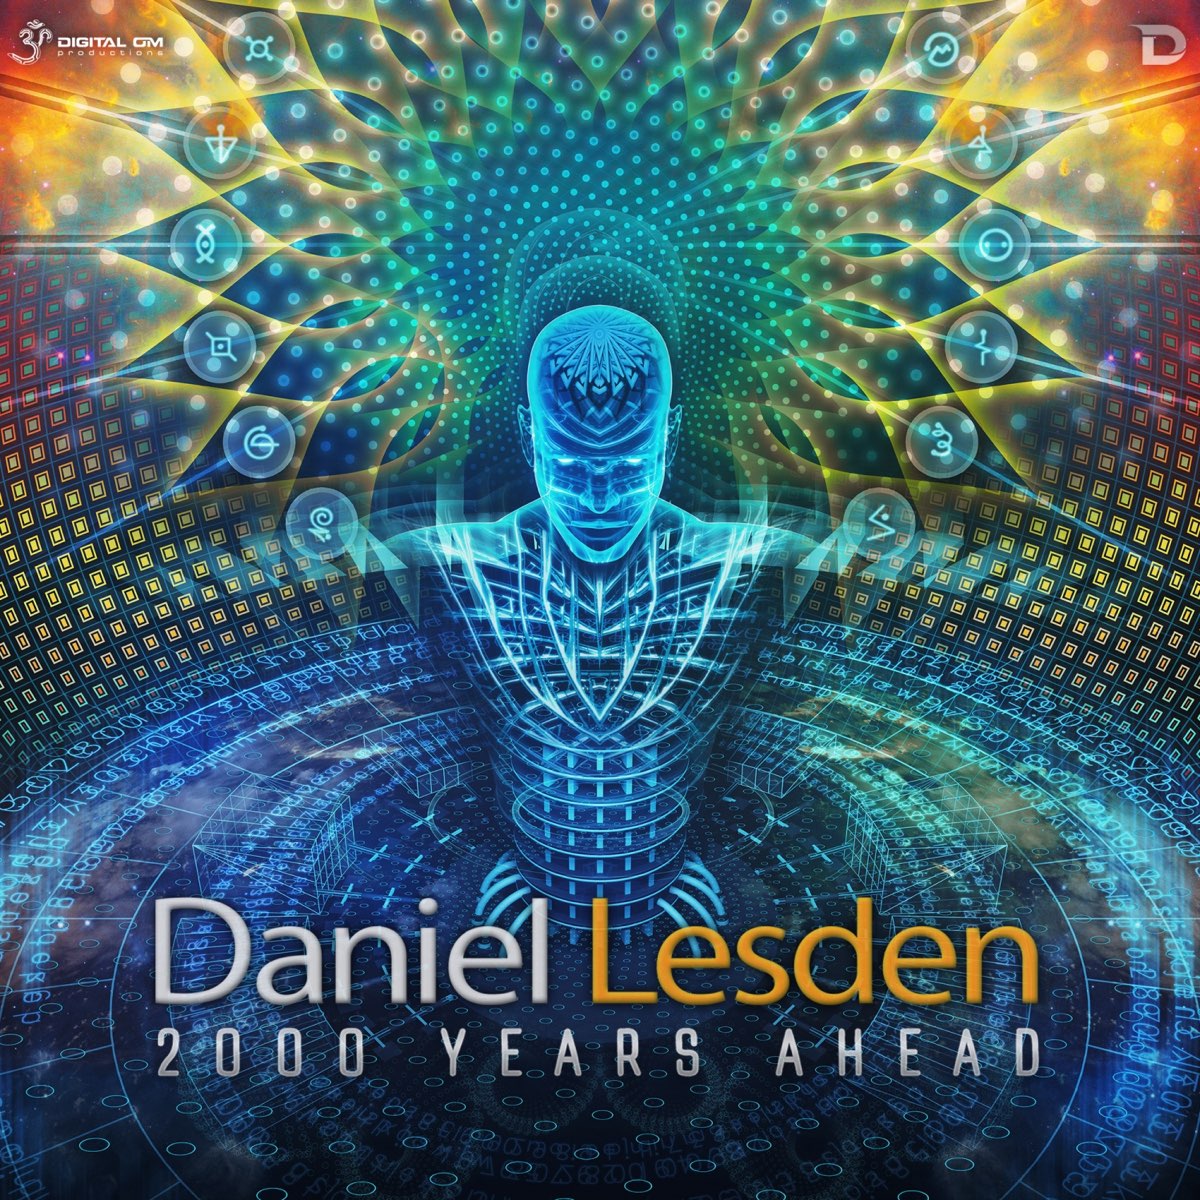 ‎2000 Years Ahead By Daniel Lesden On Apple Music